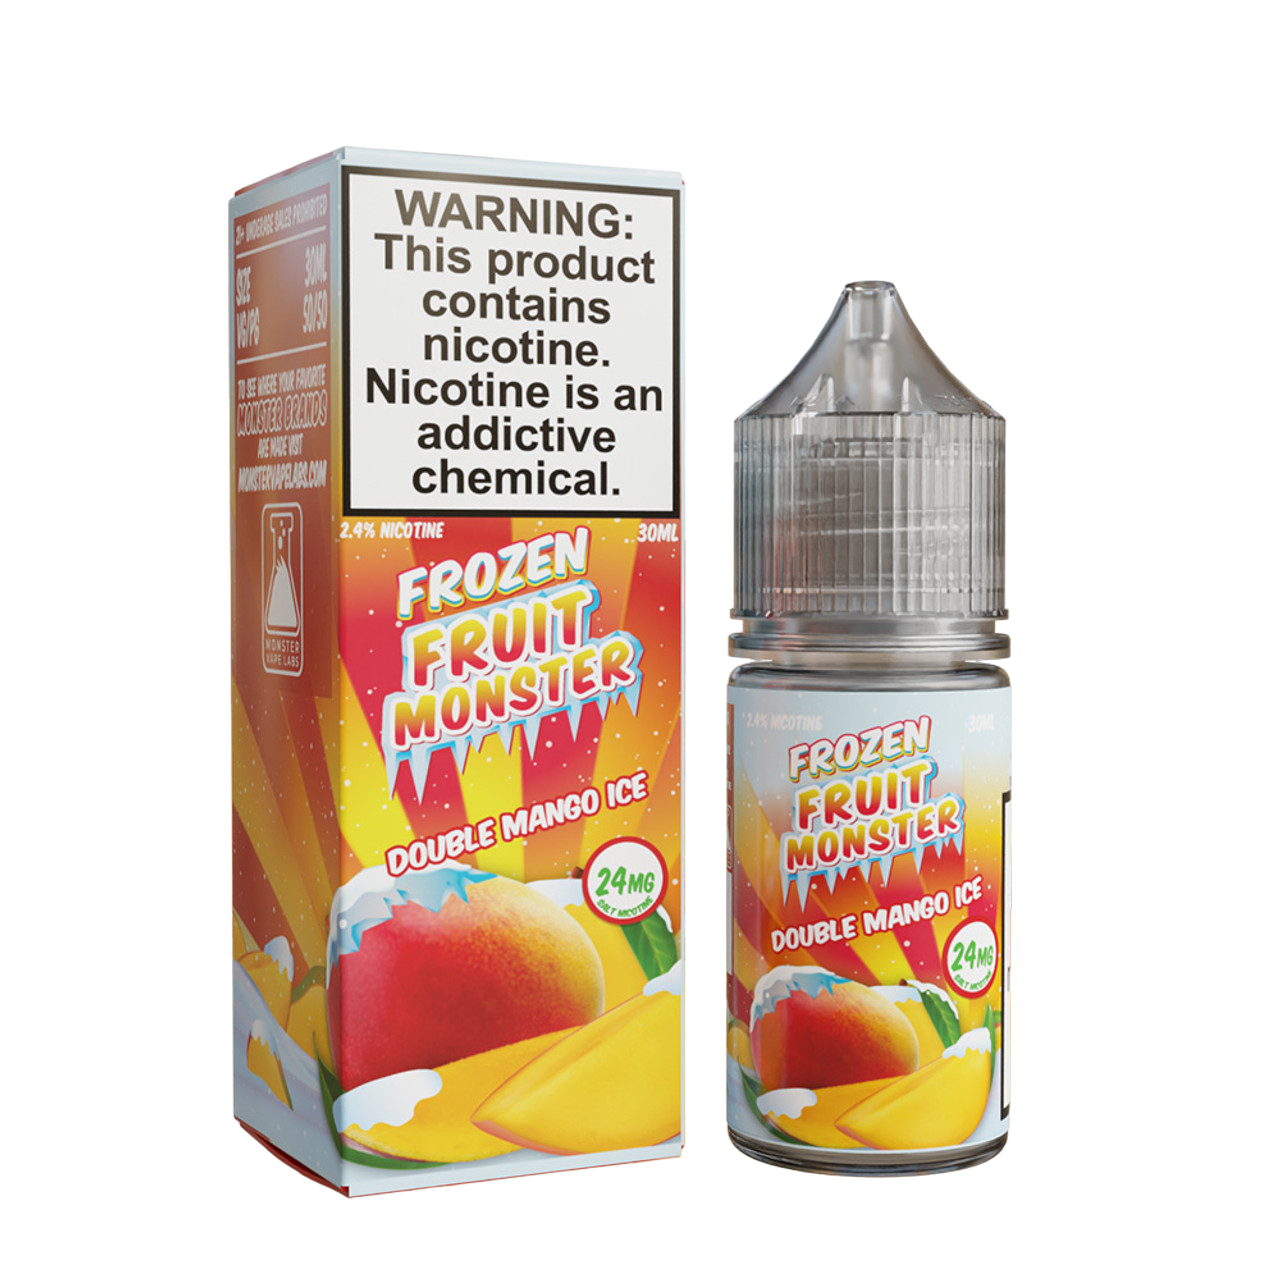 Frozen Fruit Monster Synthetic Nicotine Salt E-Liquid 30ML - Double Mango Ice